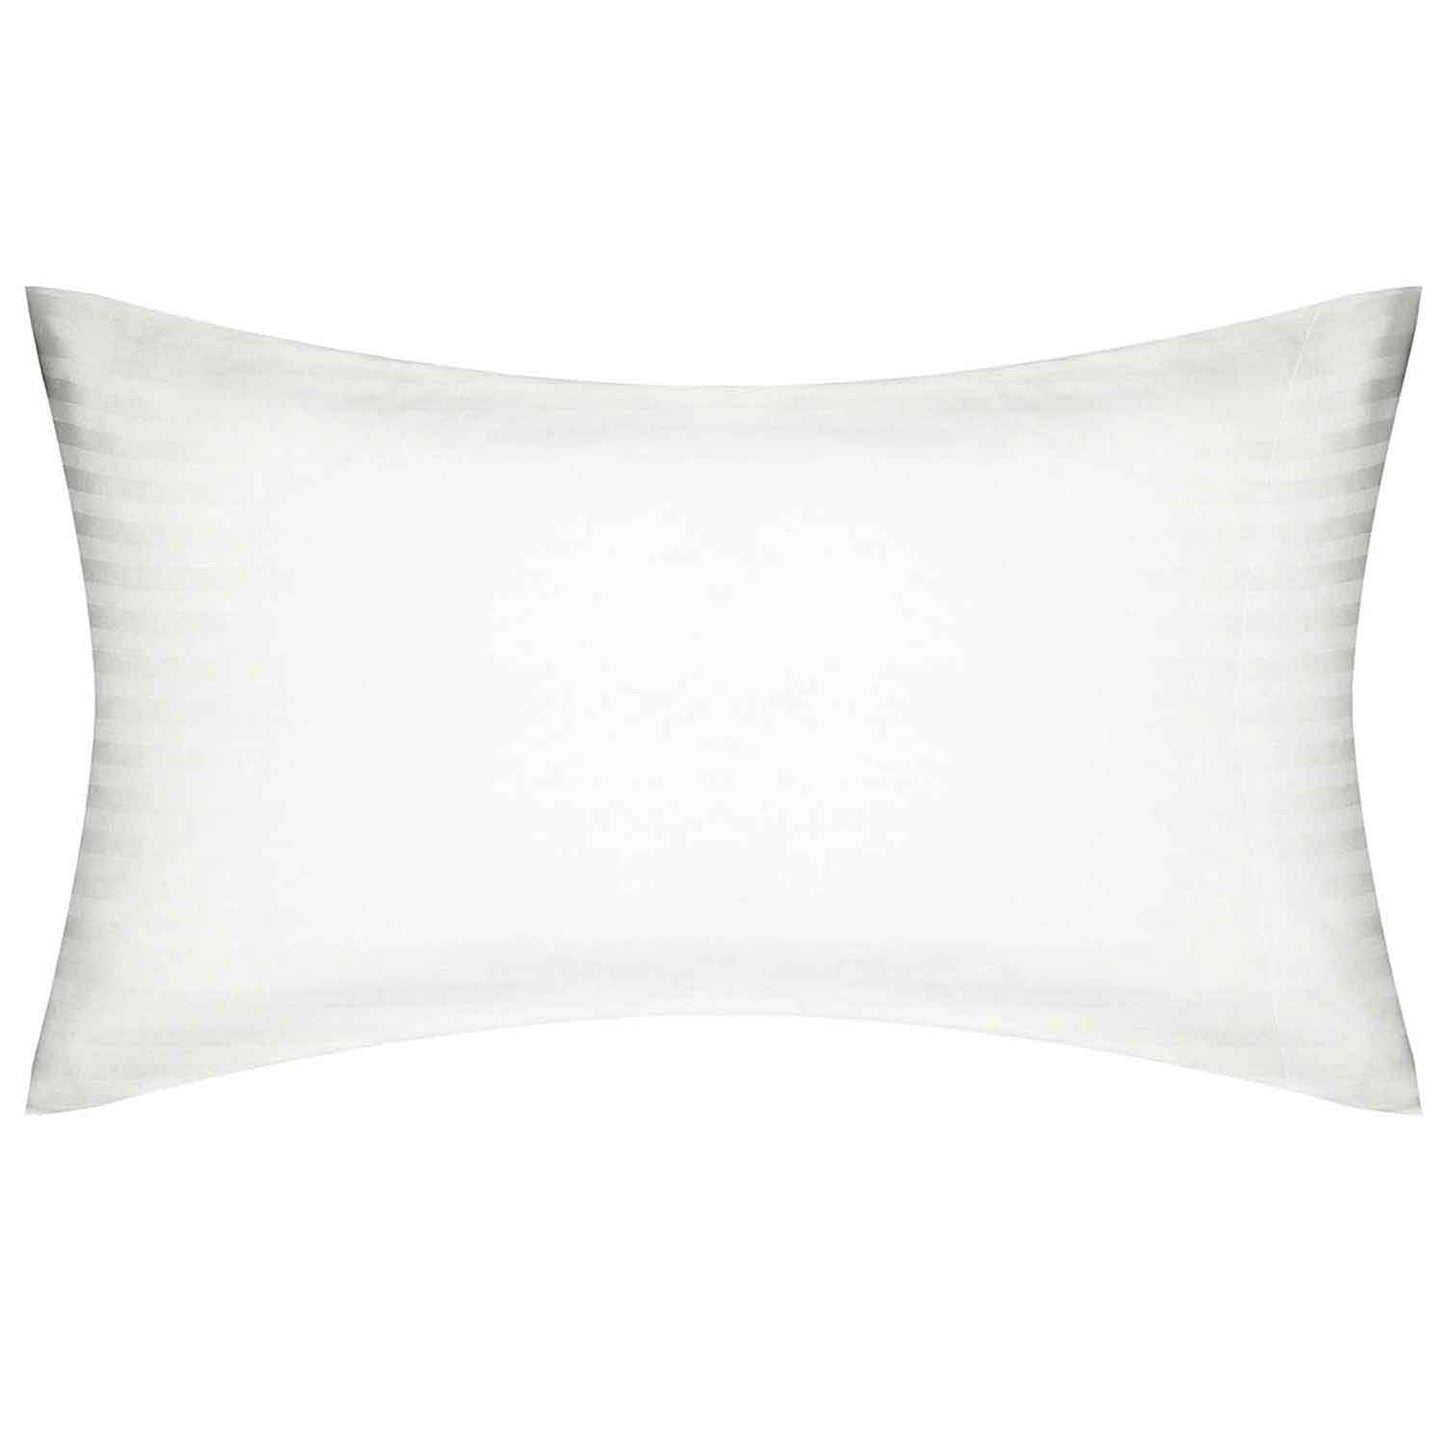 American Dawn | Standard Marbella Stripe White With Horizontal Stripes Pillowcase 